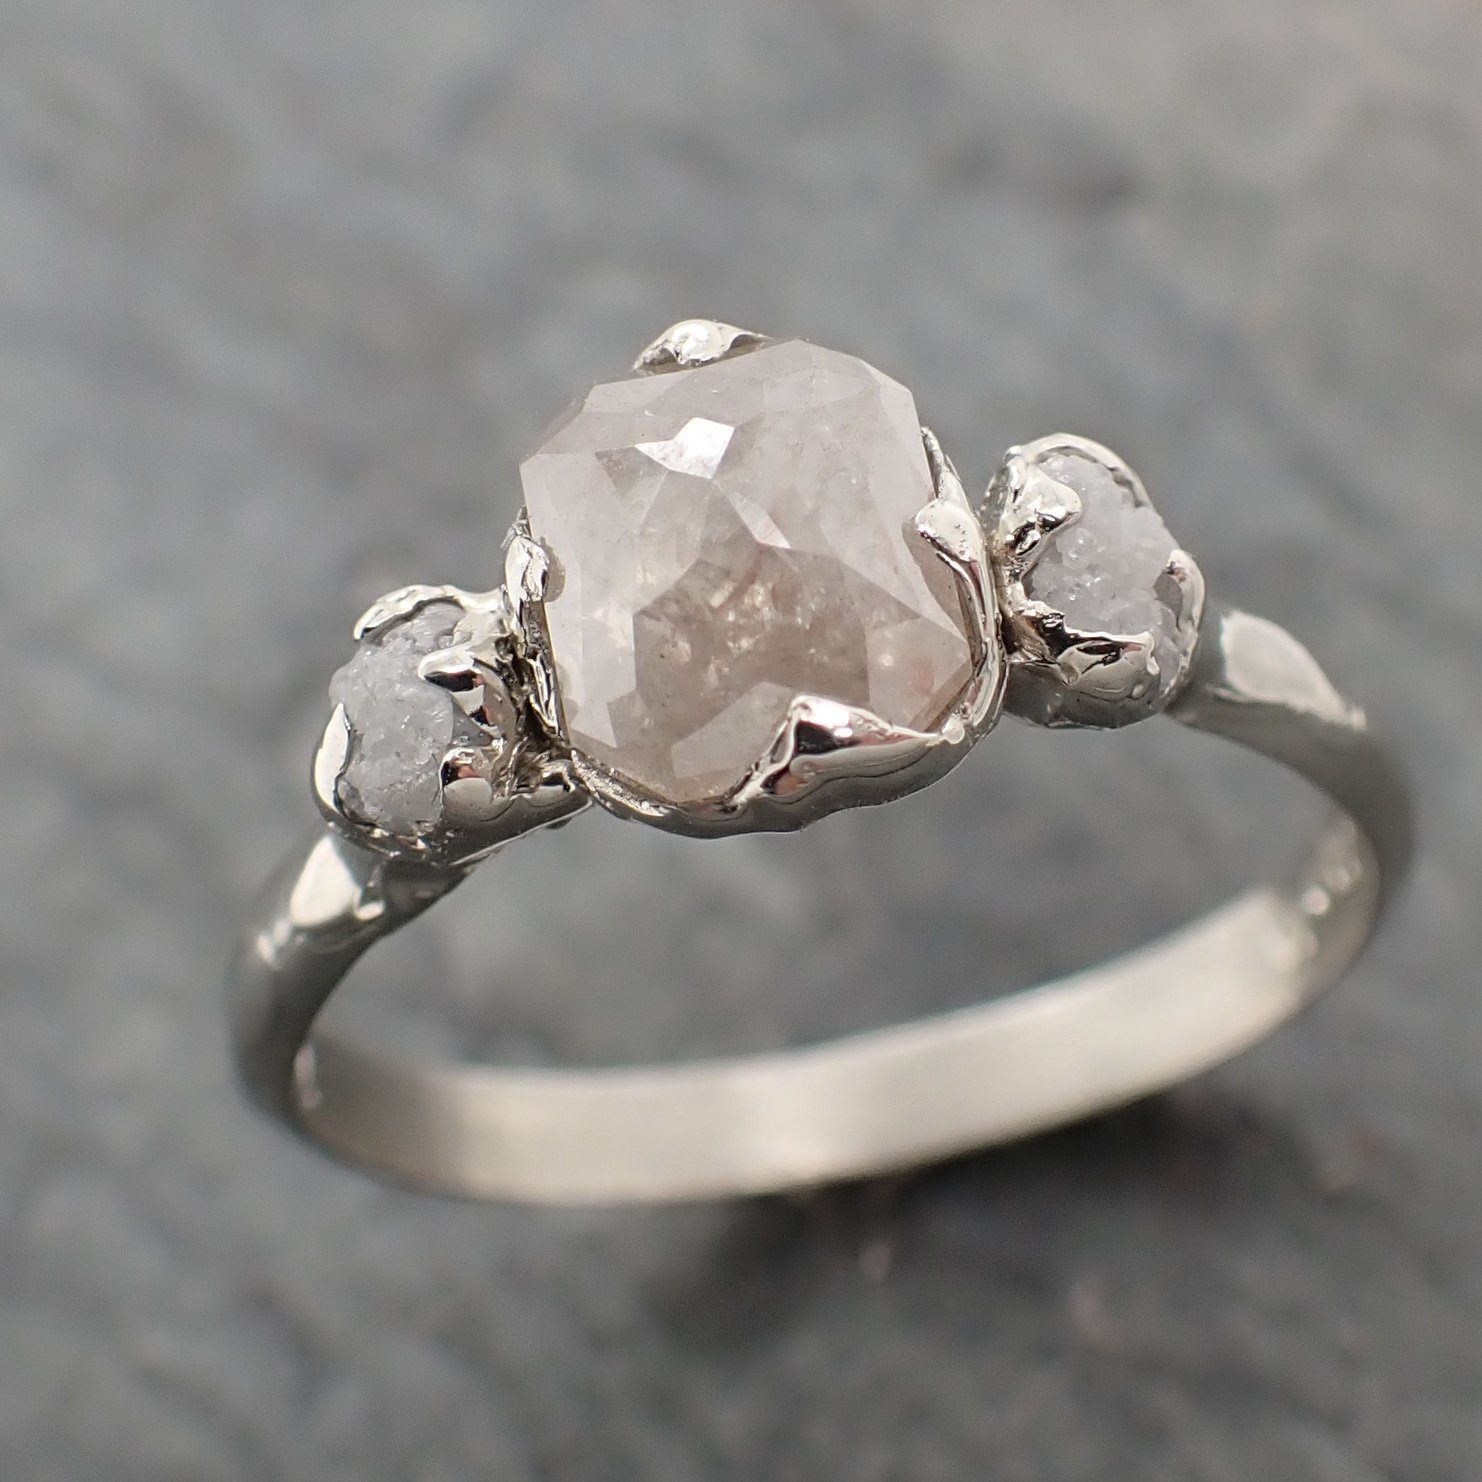 faceted fancy cut white diamond multi stone engagement 18k white gold wedding ring byangeline 2252 Alternative Engagement